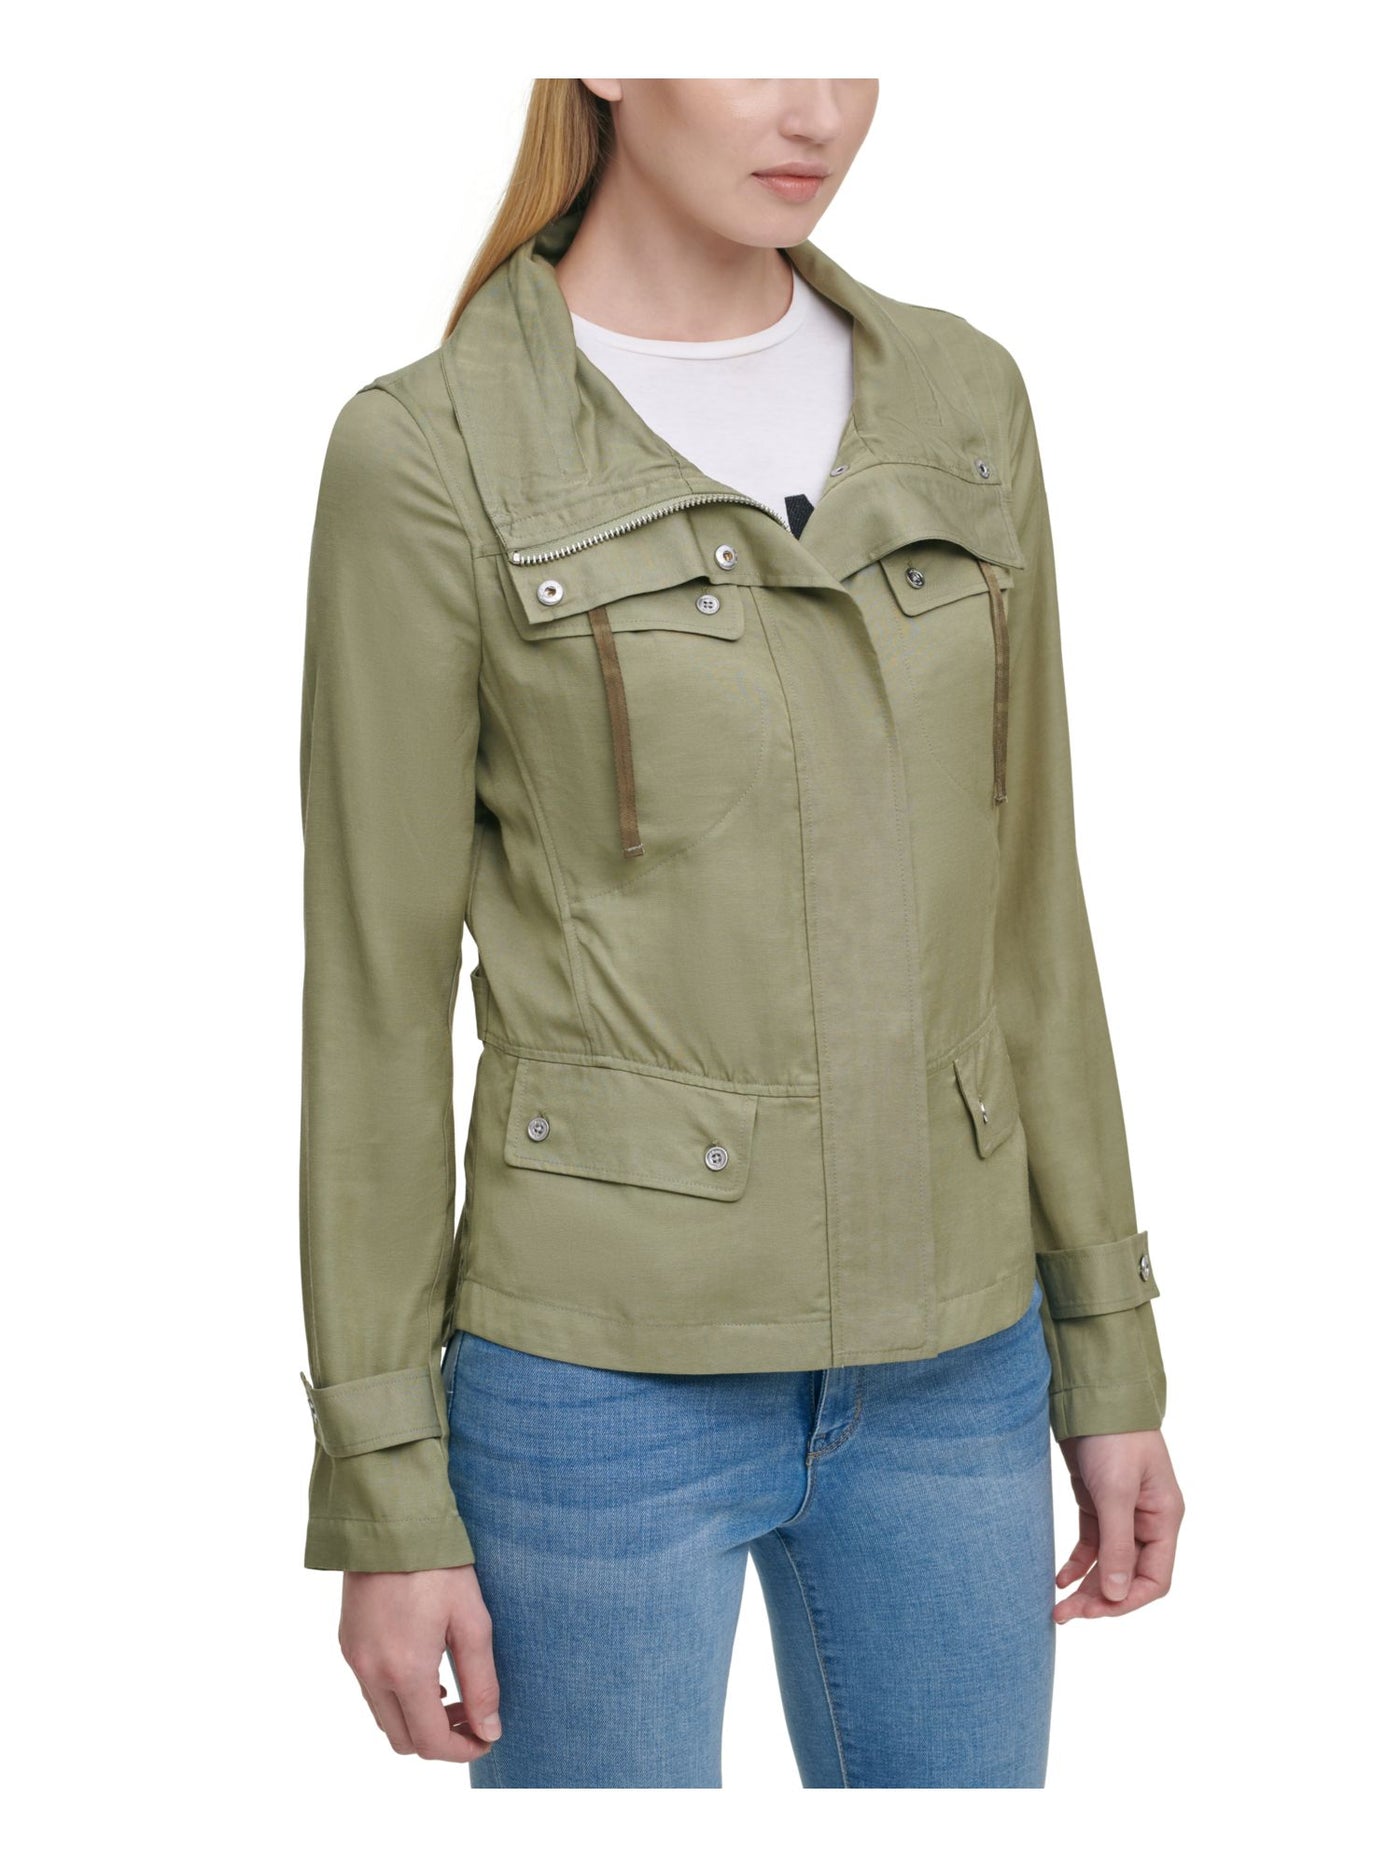 DKNY Womens Green Zippered Jacket L